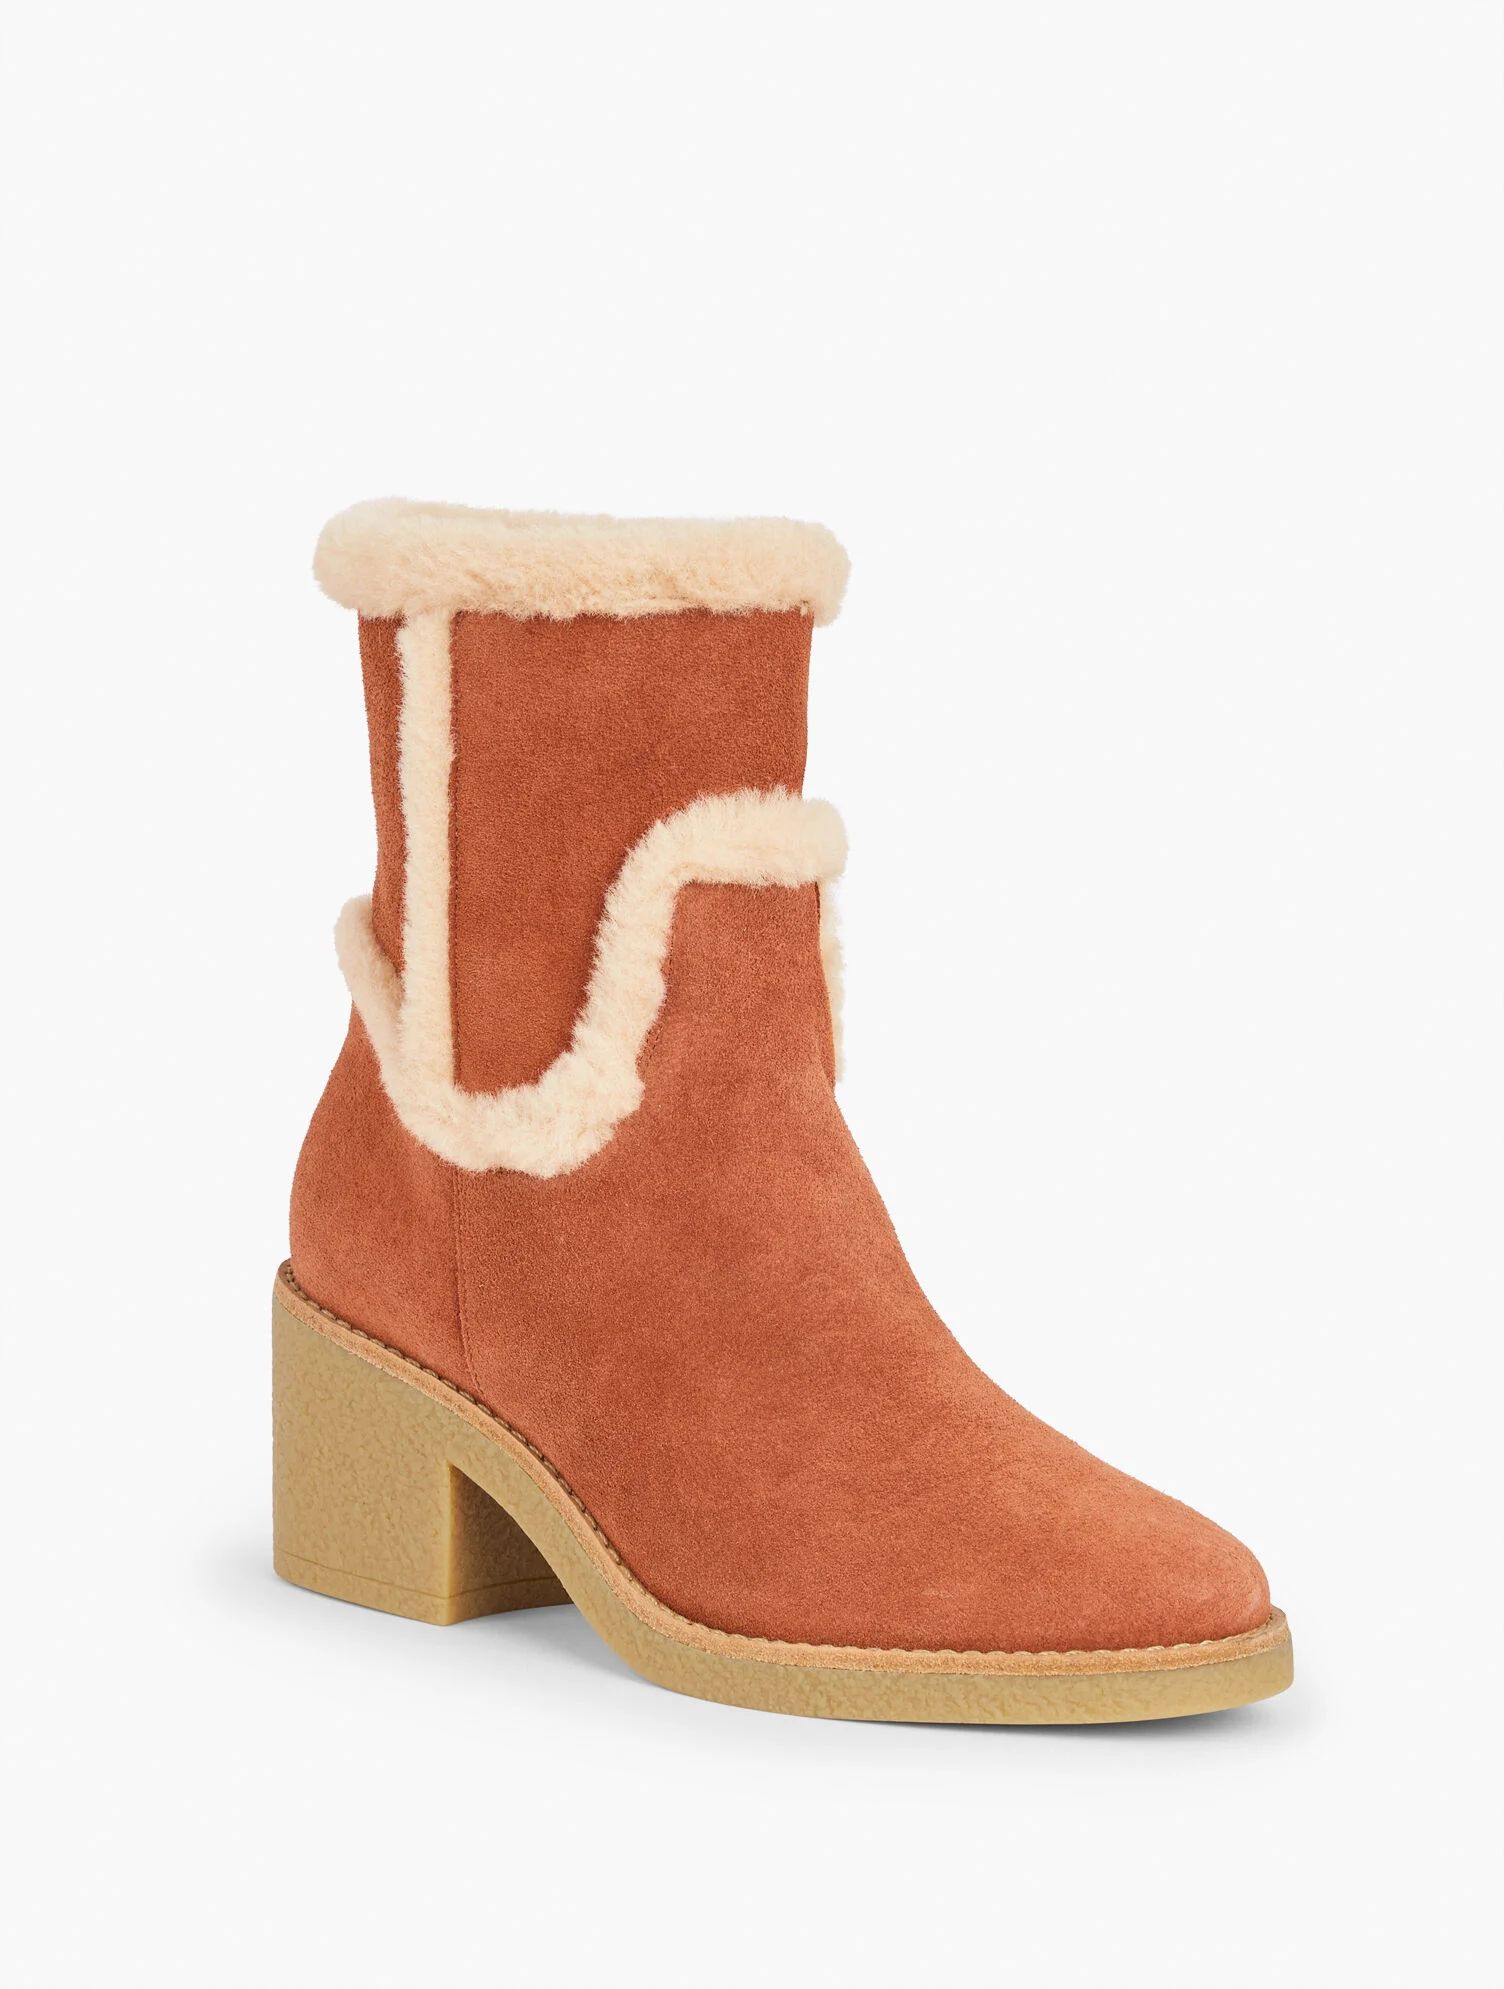 Reese Sherpa Block Heel Boots - Suede | Talbots